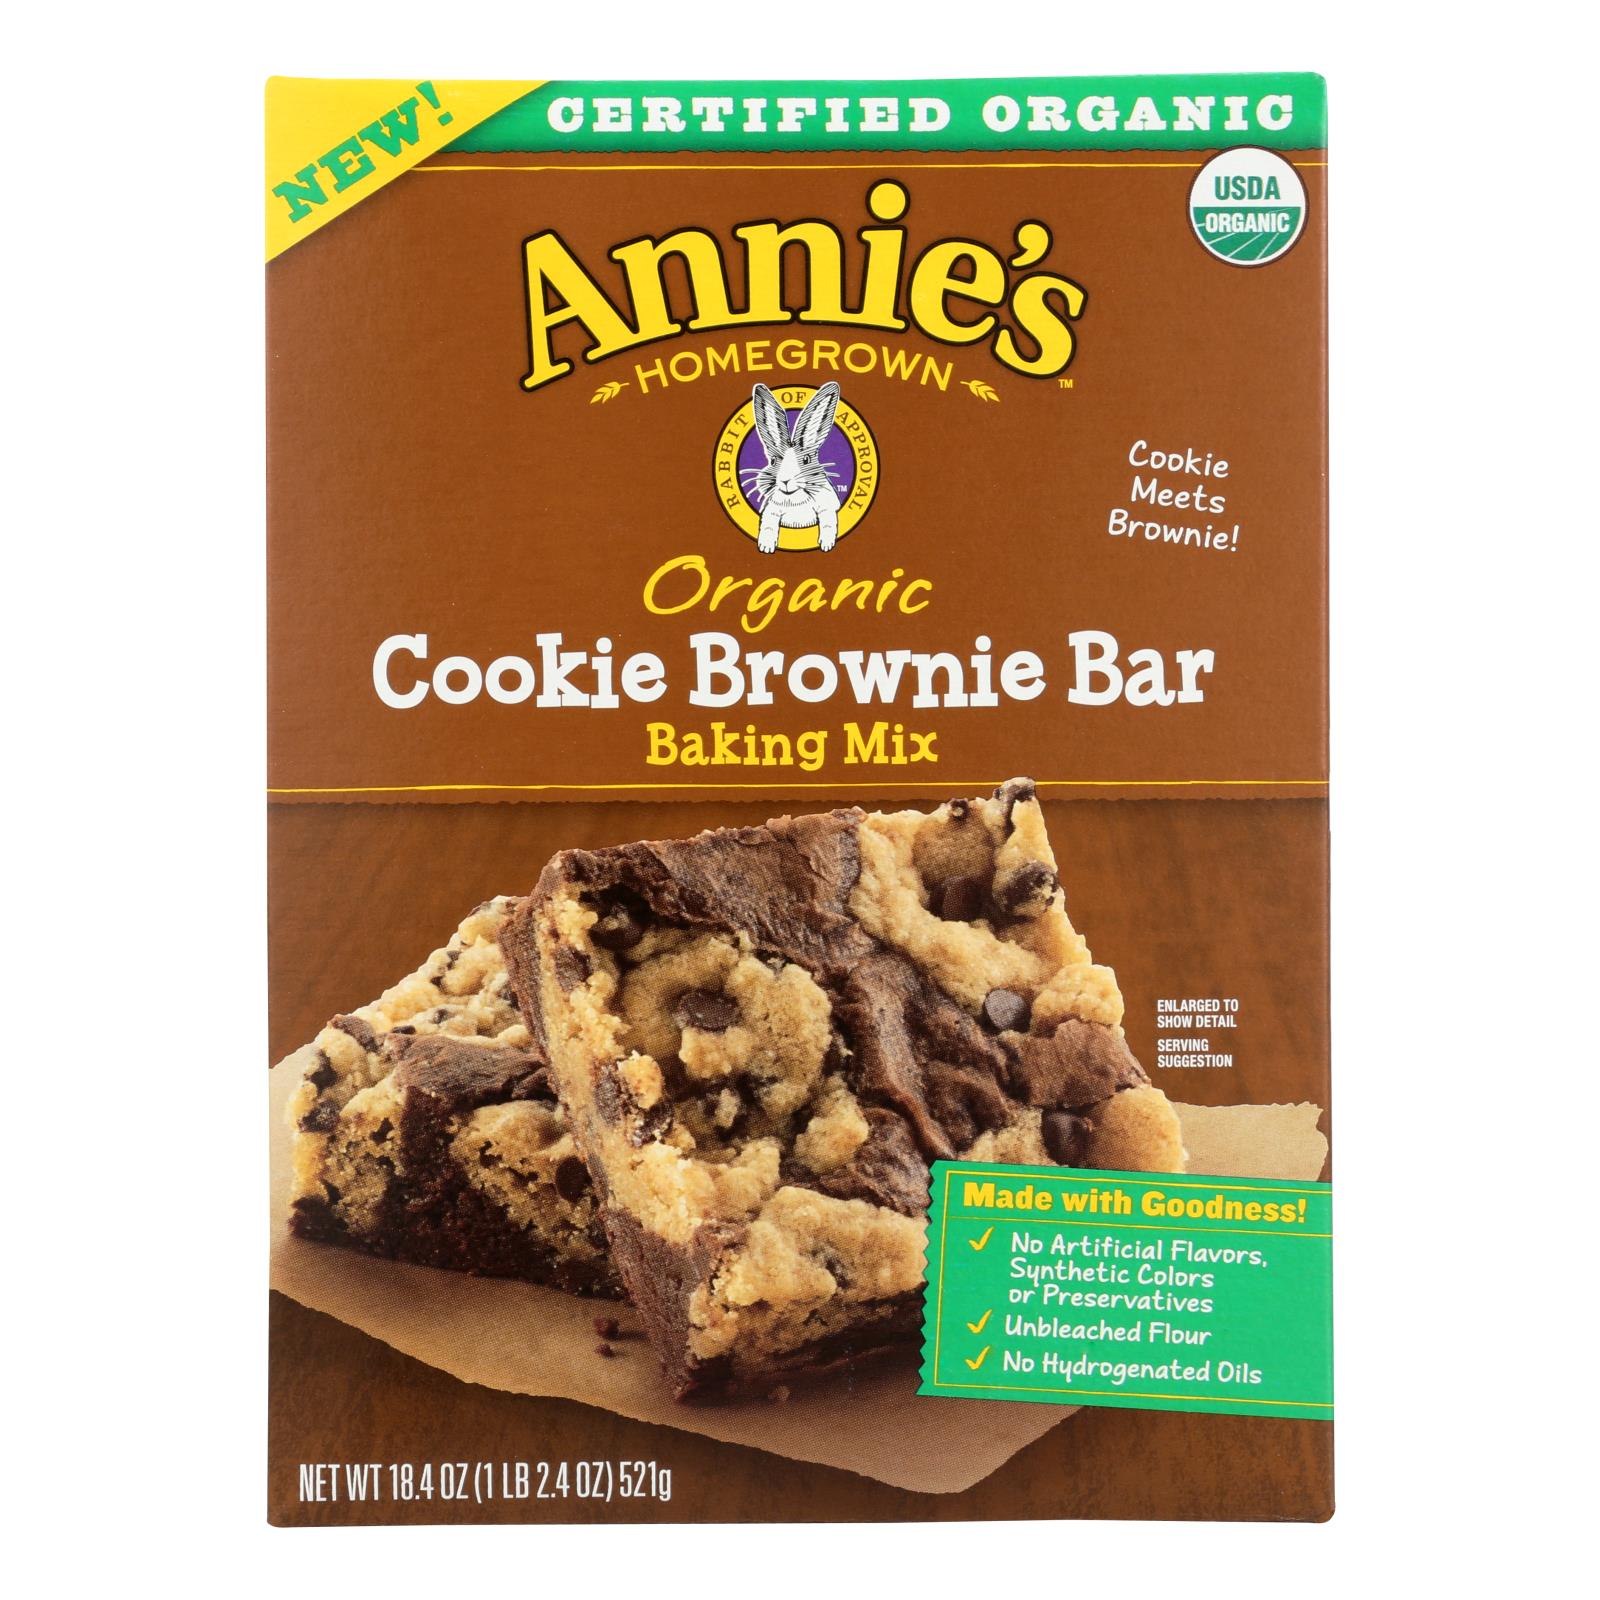 Make Annie's Cookie Bars, Brownie And - 8개 묶음상품 - 18.4 OZ